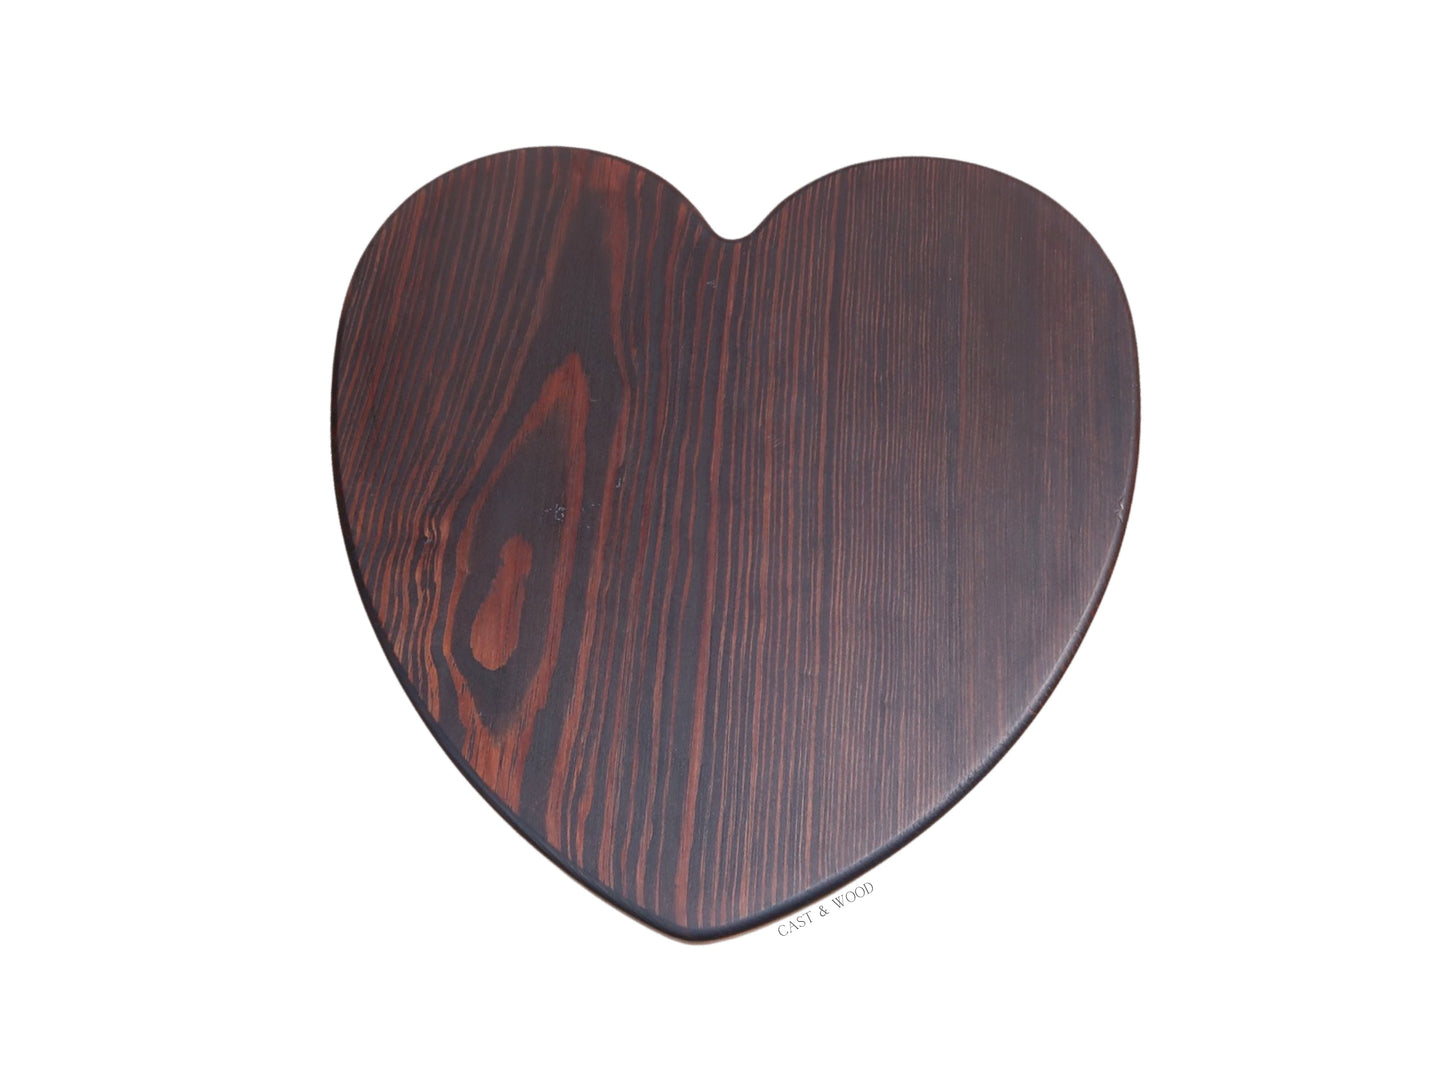 Heart Shaped Stool / Side Table